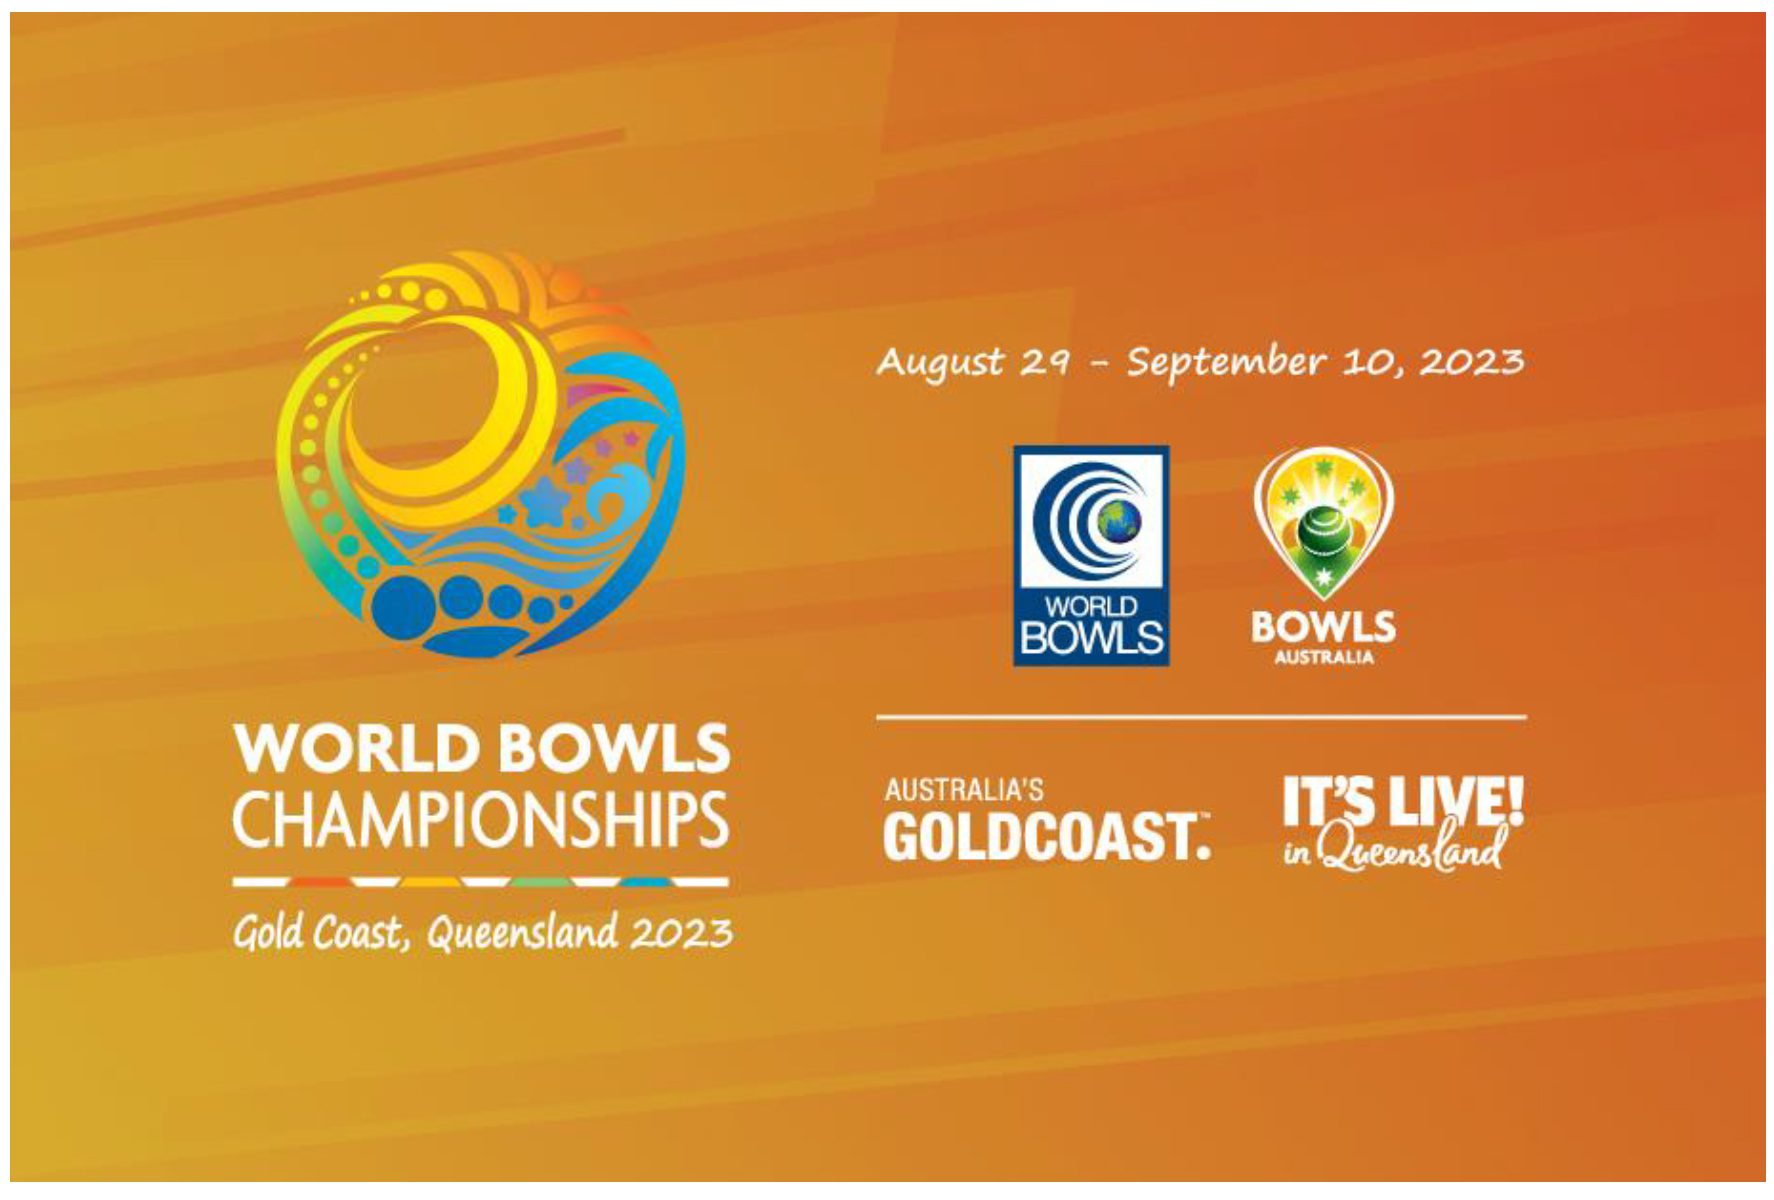 World Bowls 2023 confirmed for Gold Coast World Bowls